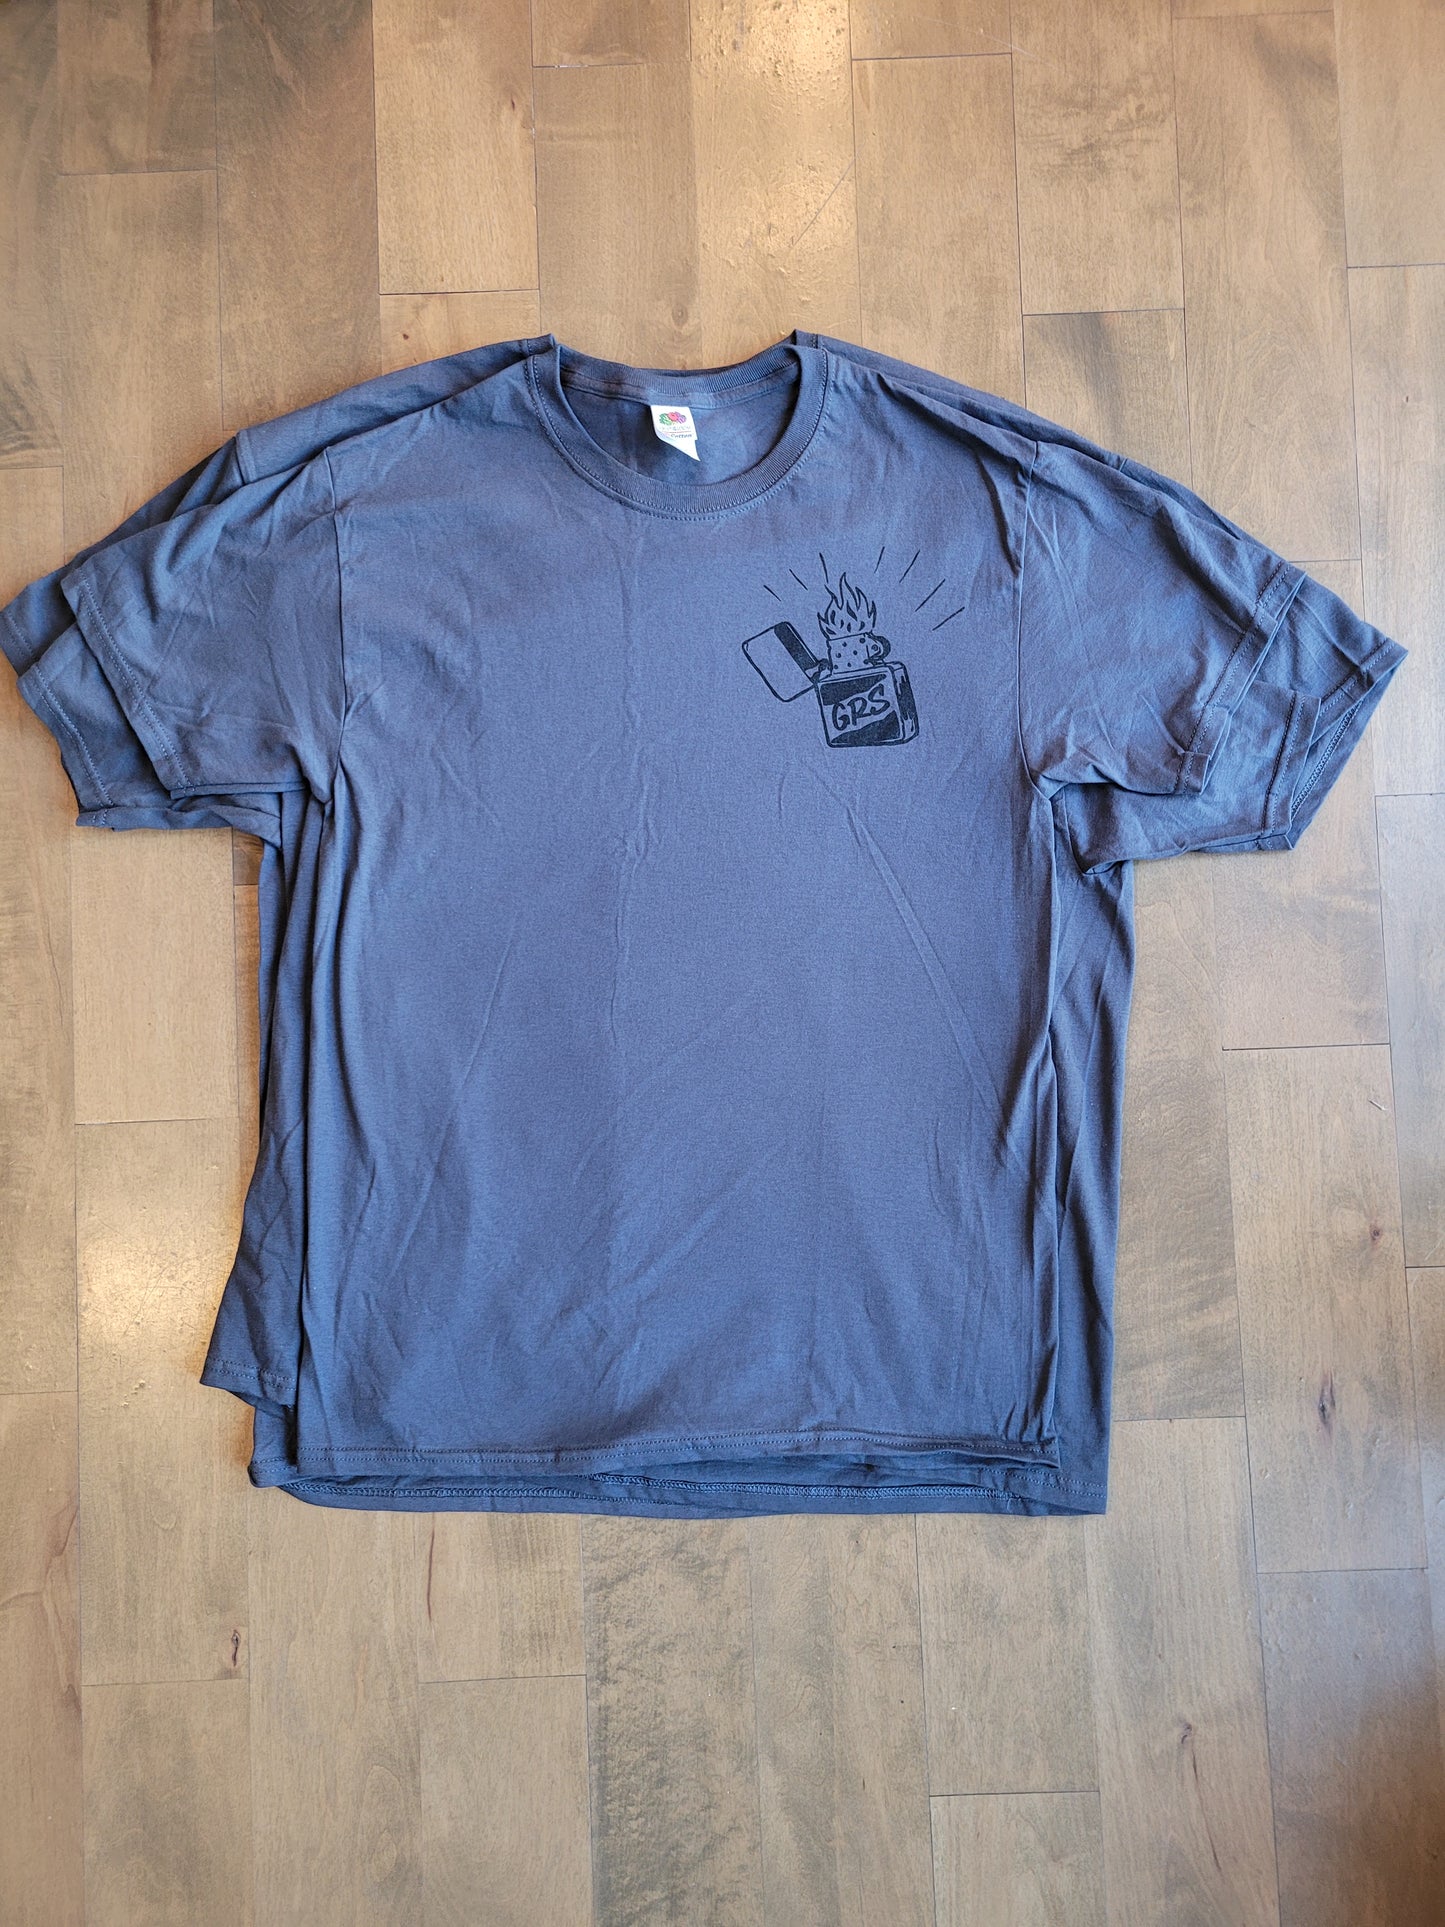 Grand River - Zippo T-Shirt (Dark Grey)